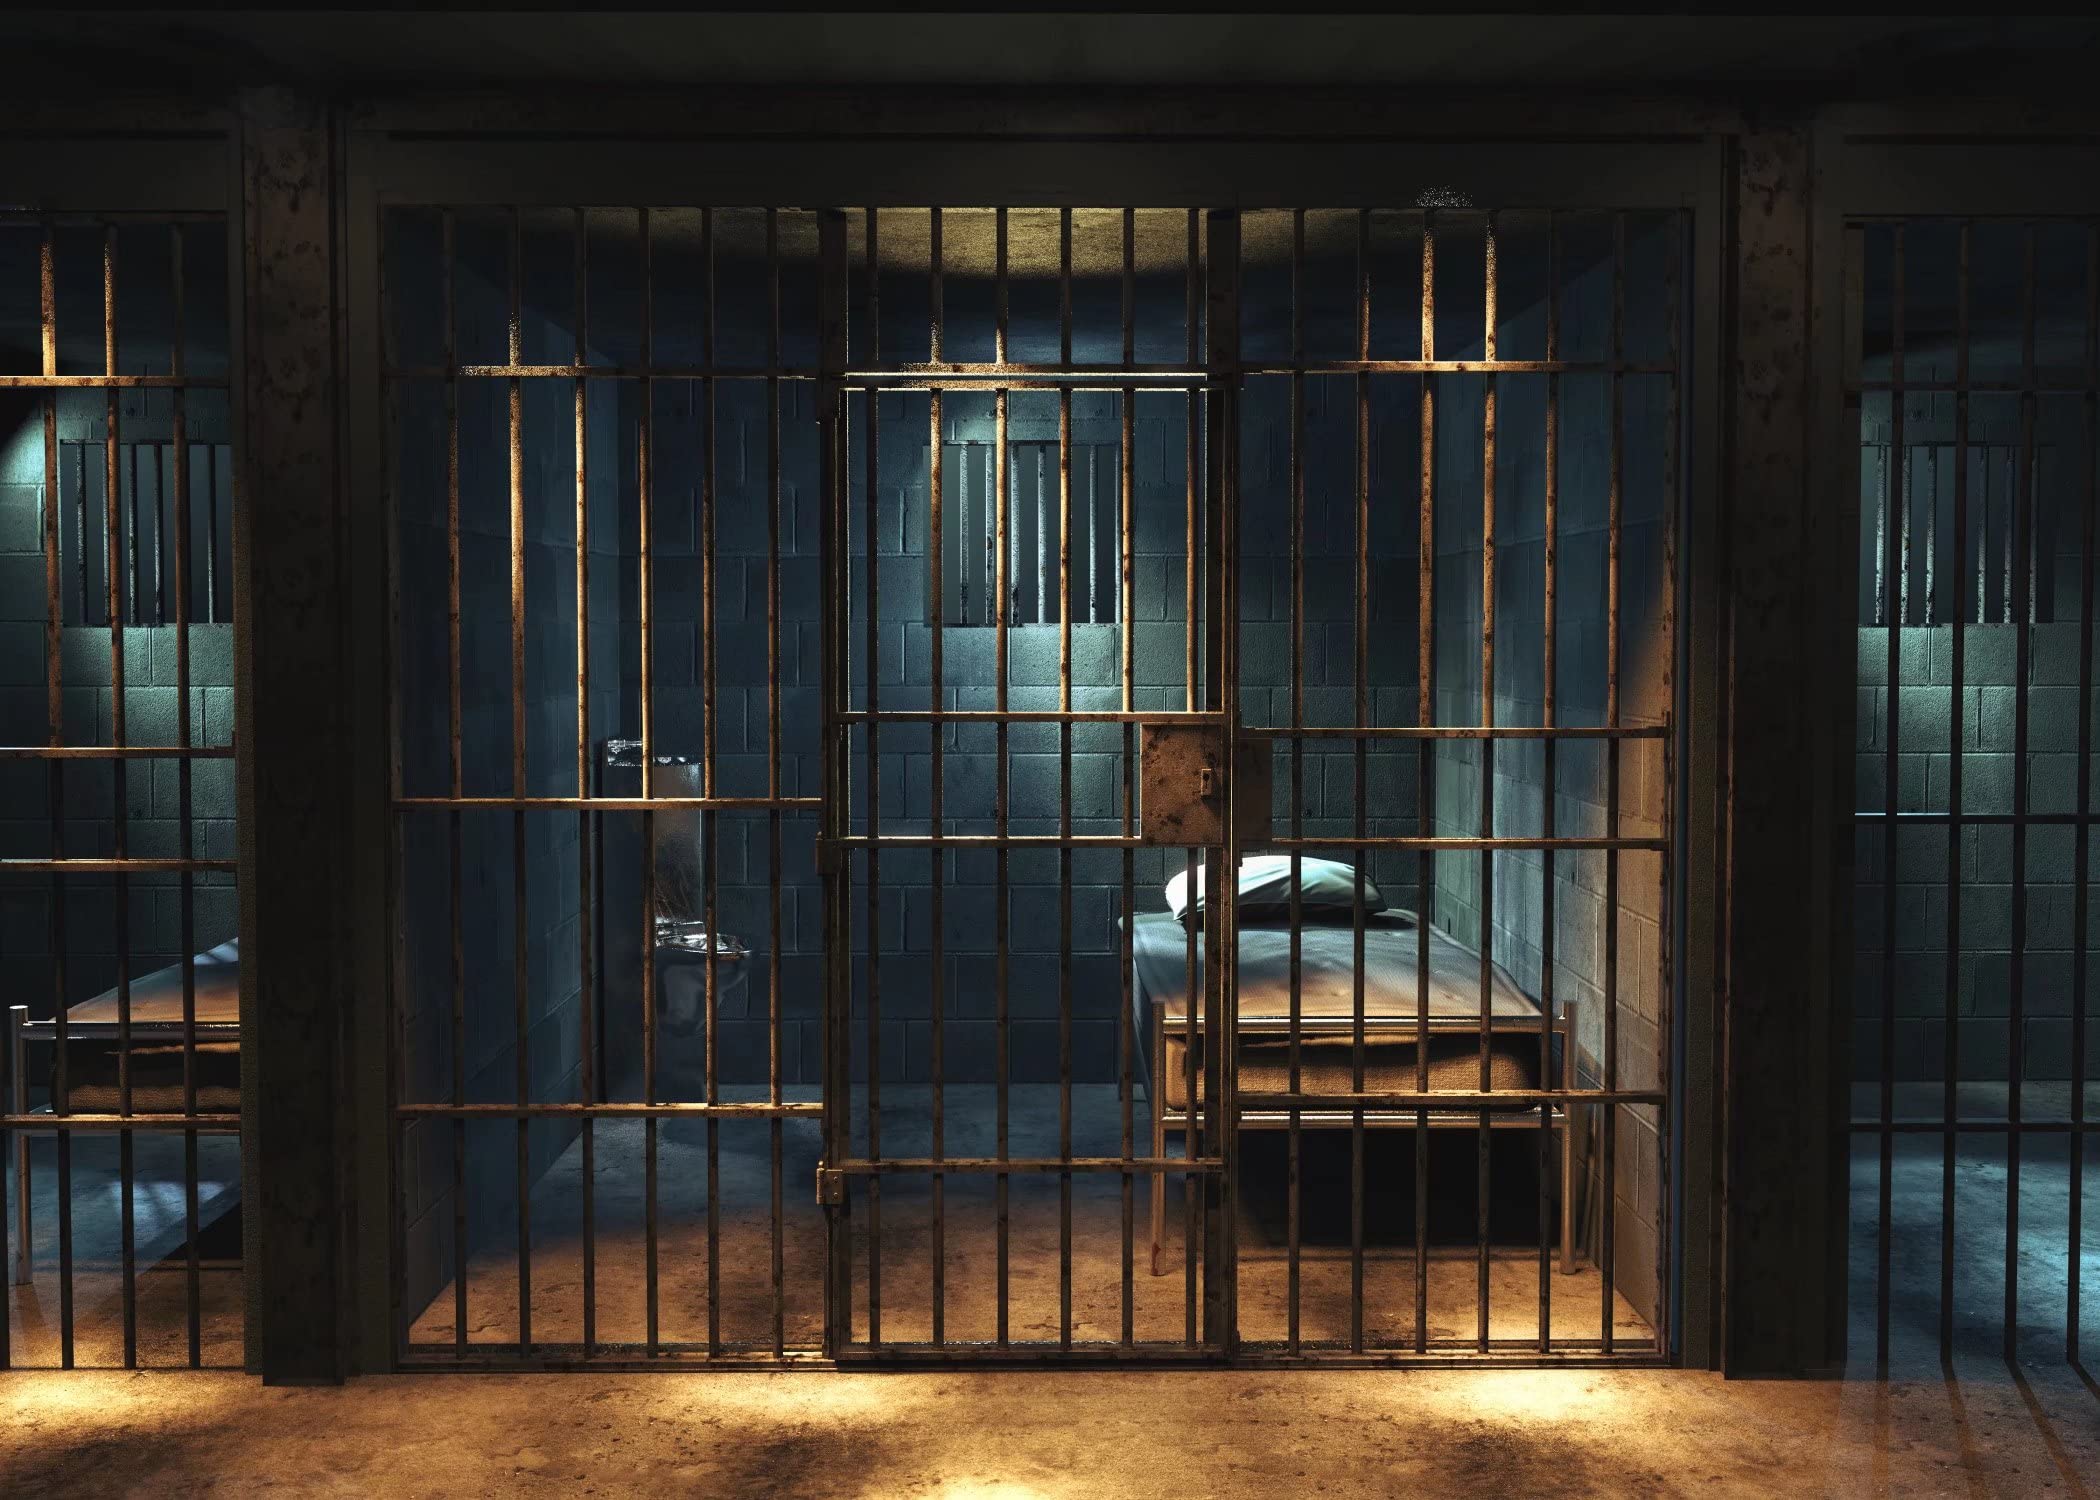 A dark prison cell.